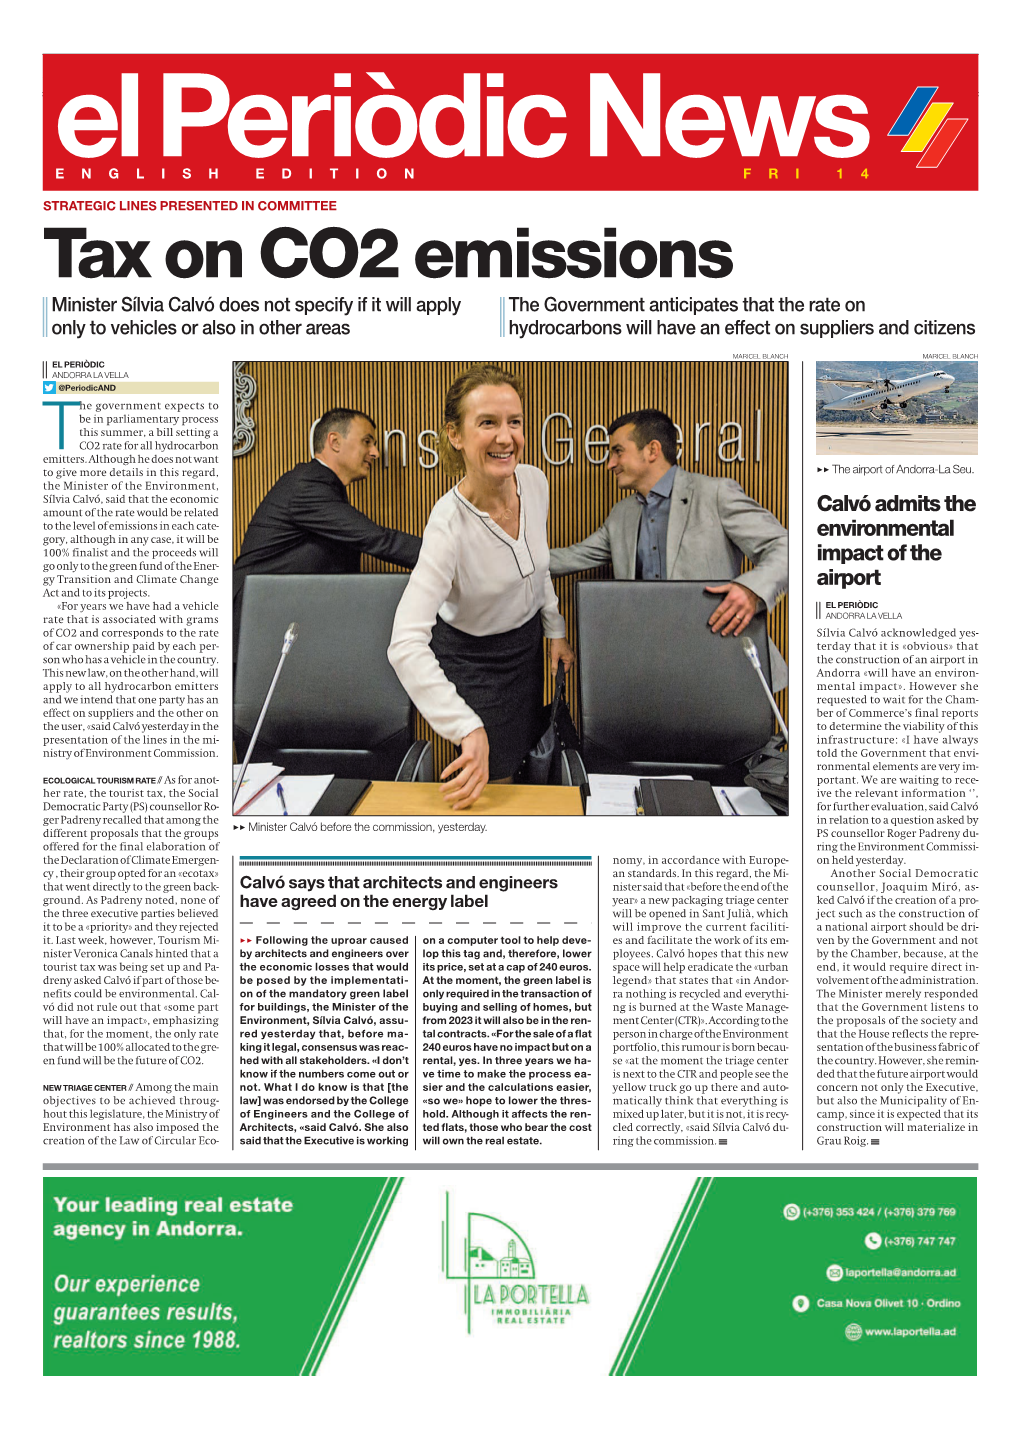 Tax on CO2 Emissions